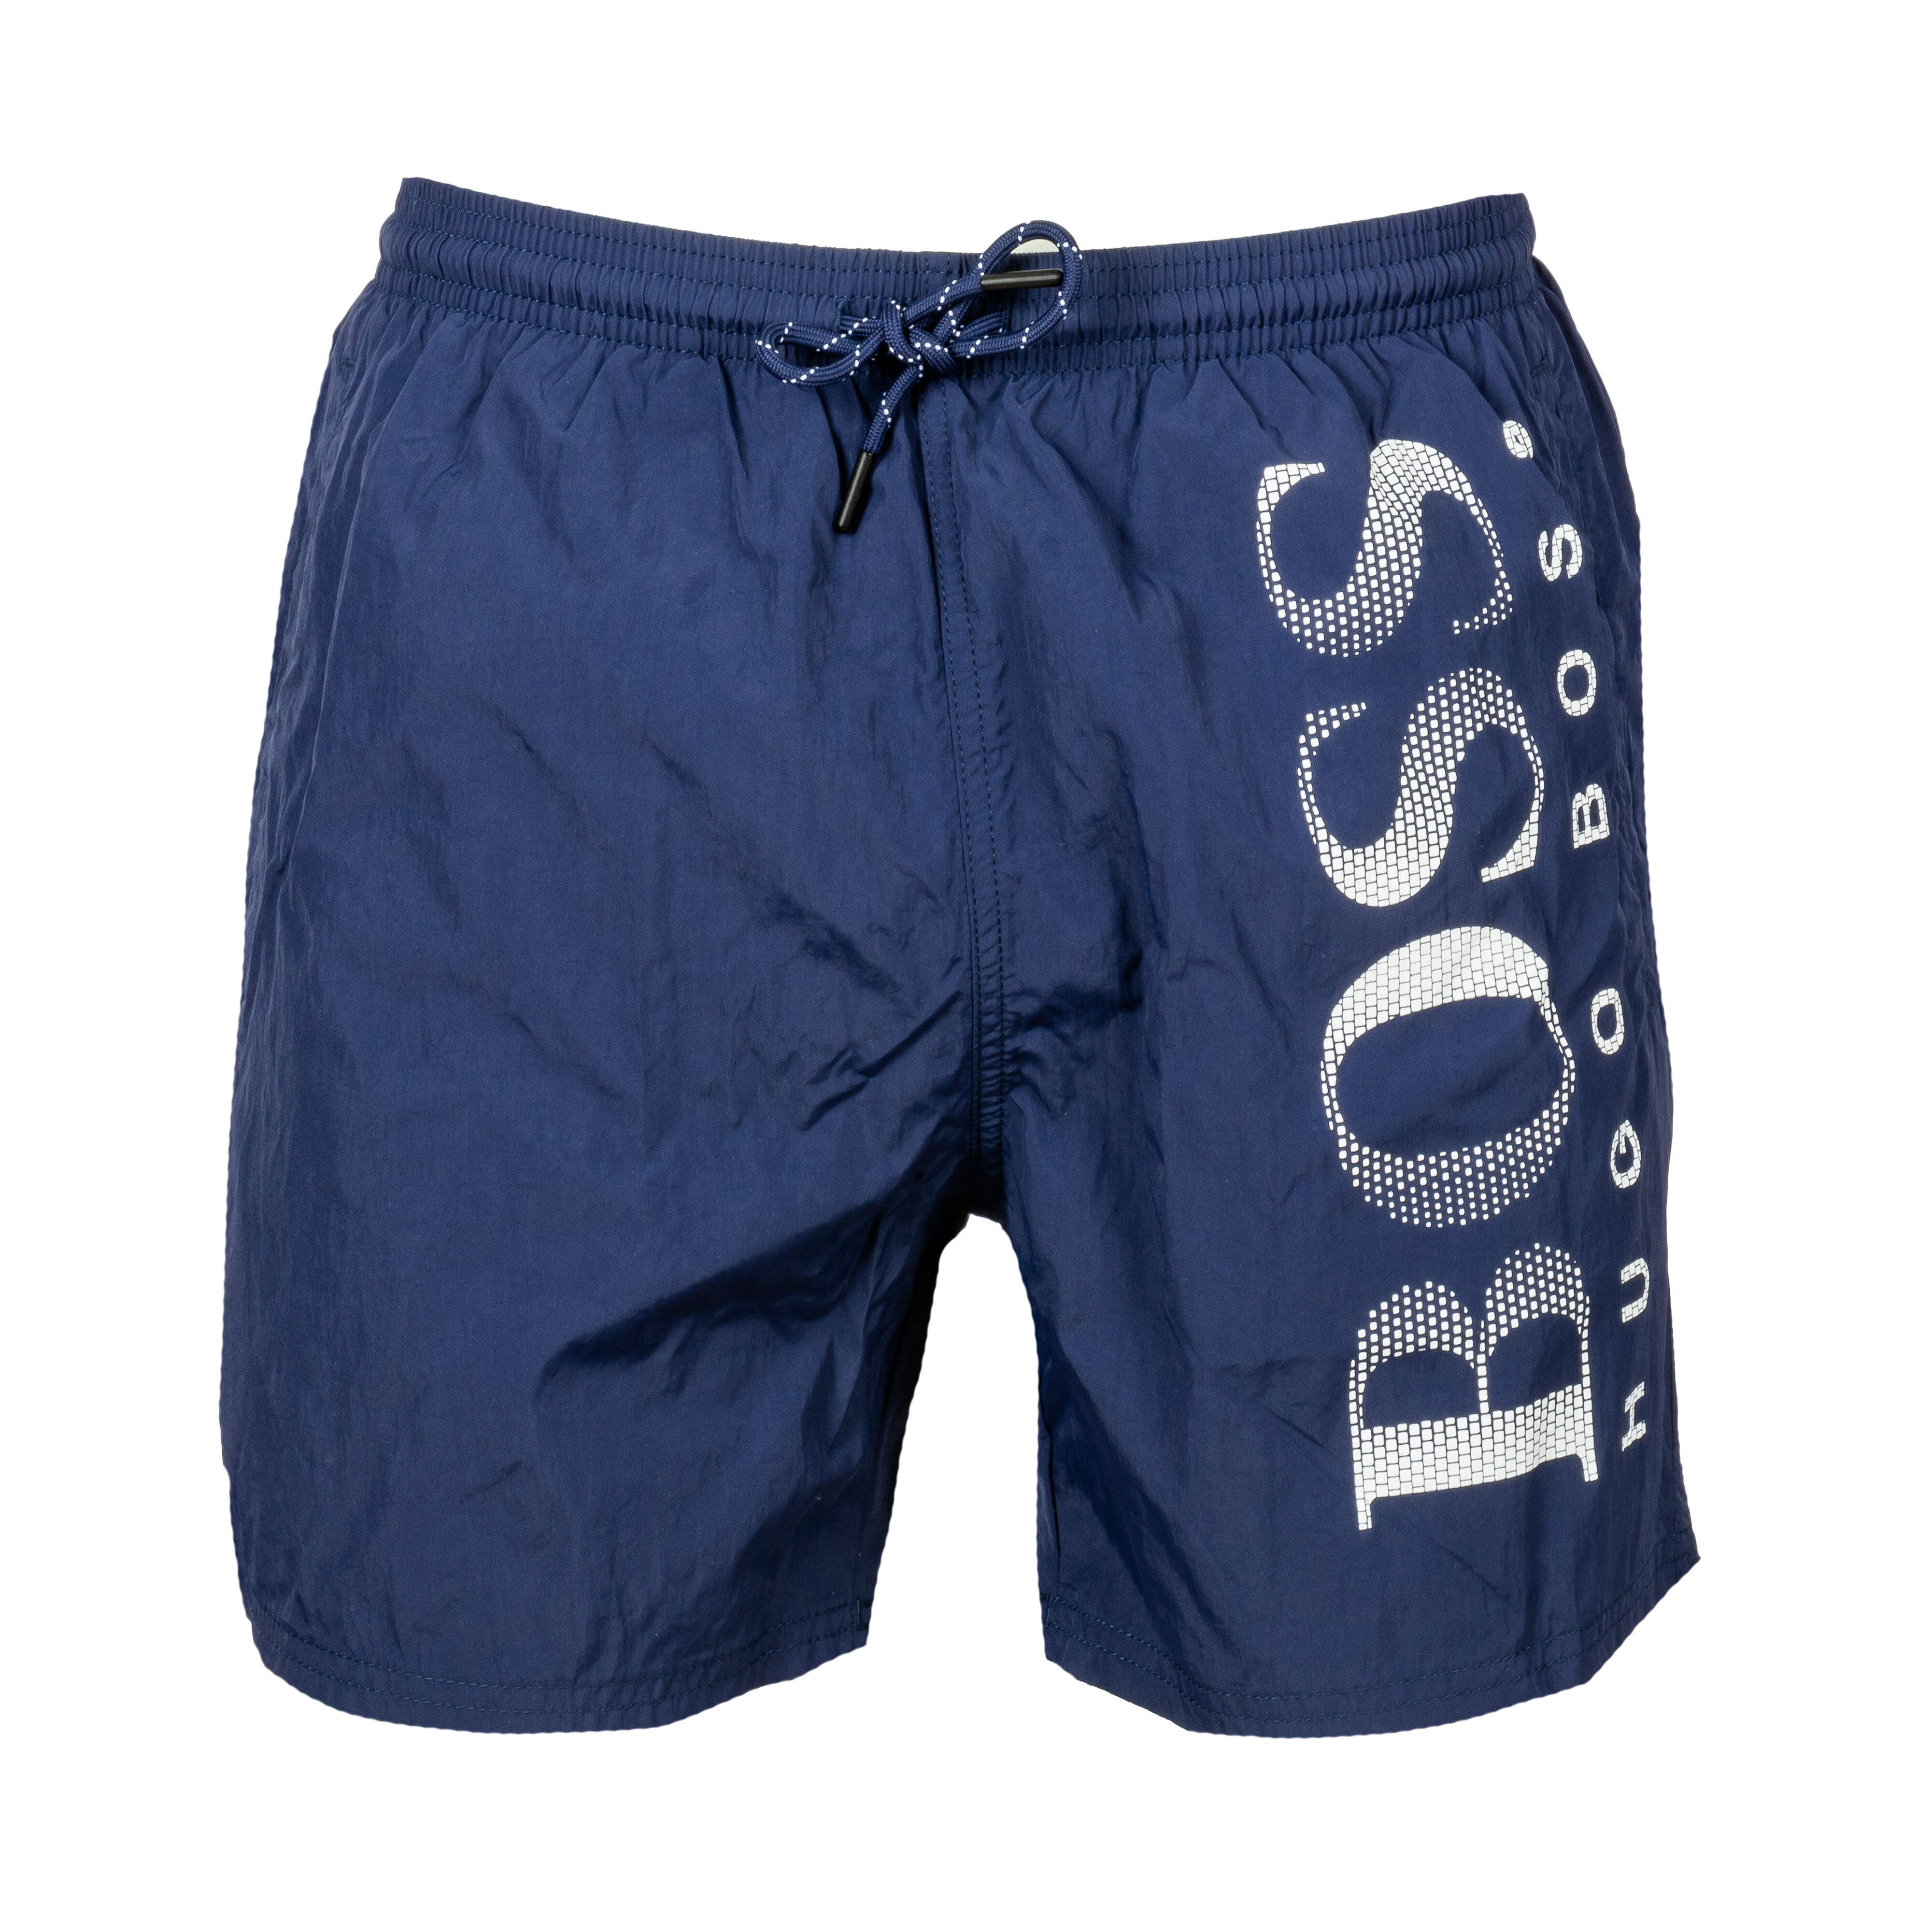 Hugo Boss Short de bain Hugo Boss bleu marine à logo blanc - BLEU MARINE -